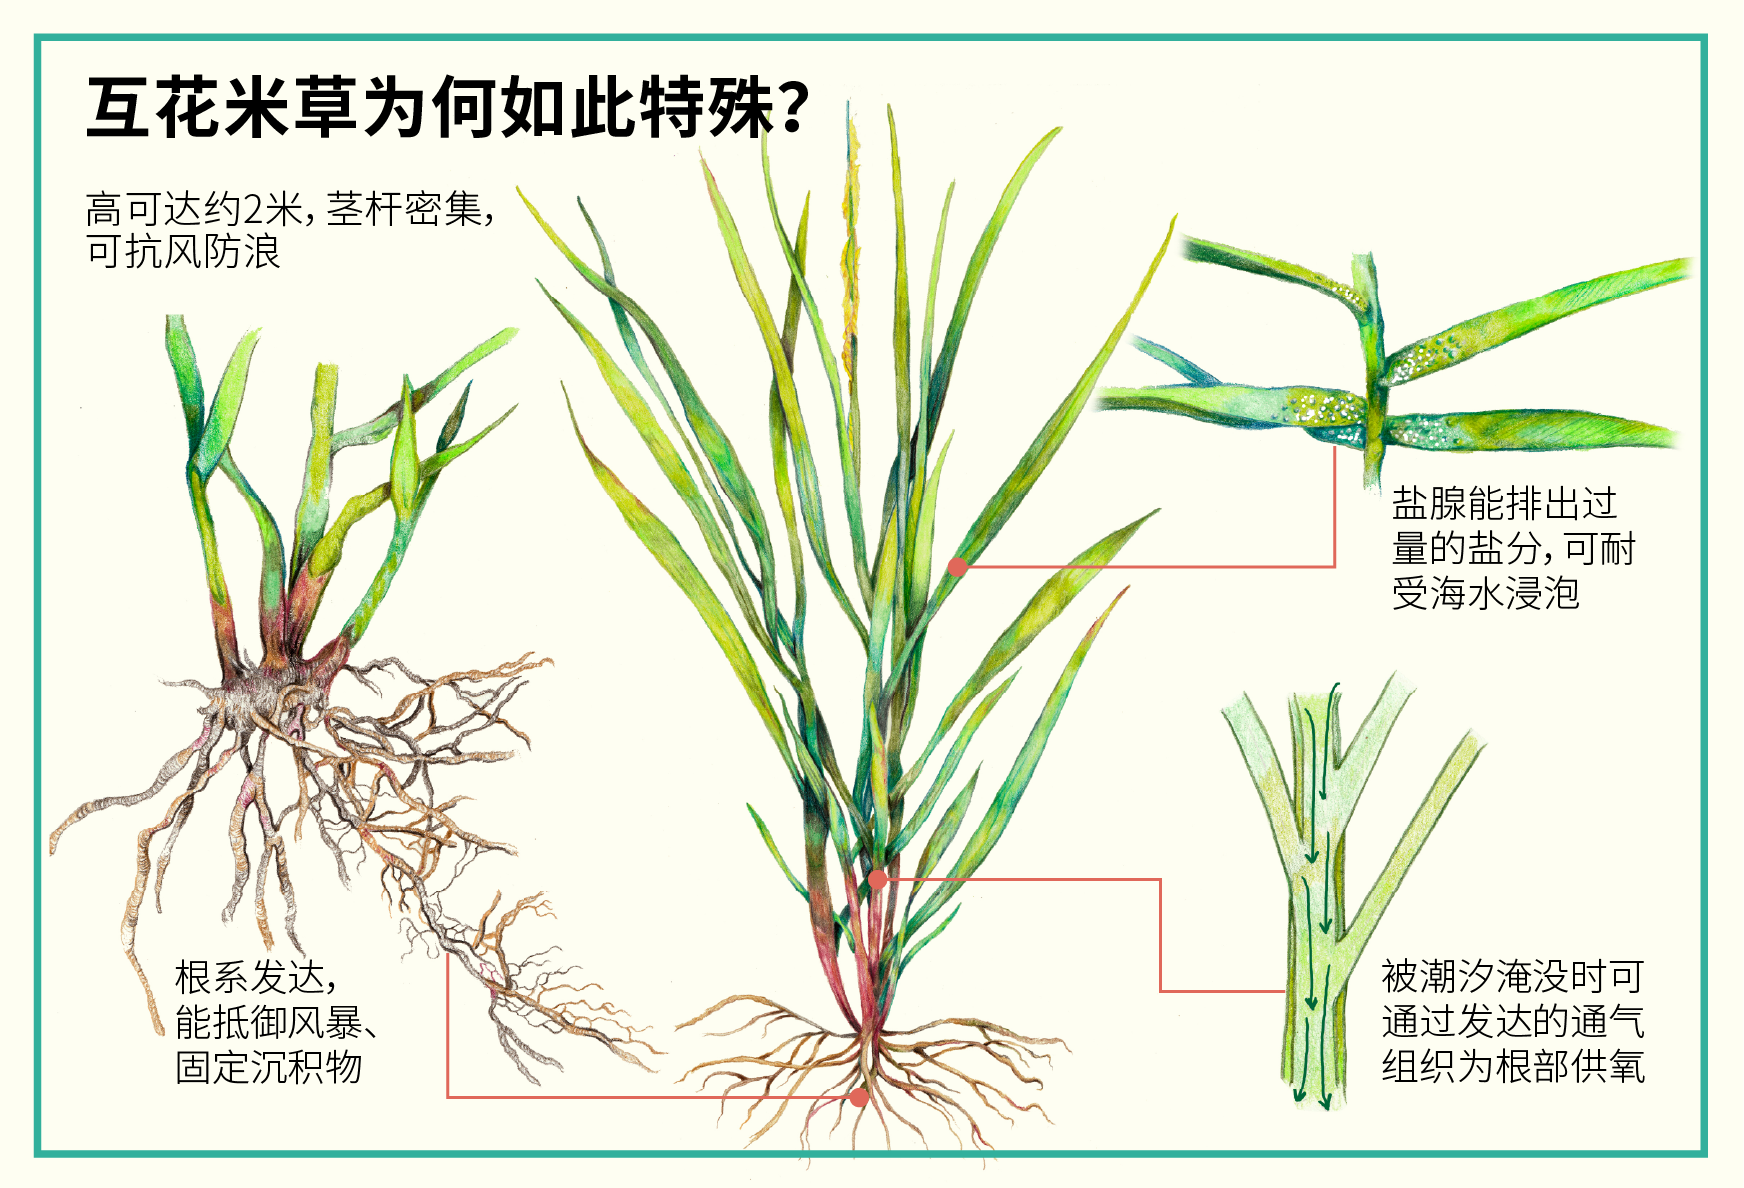 Characteristics of cordgrass